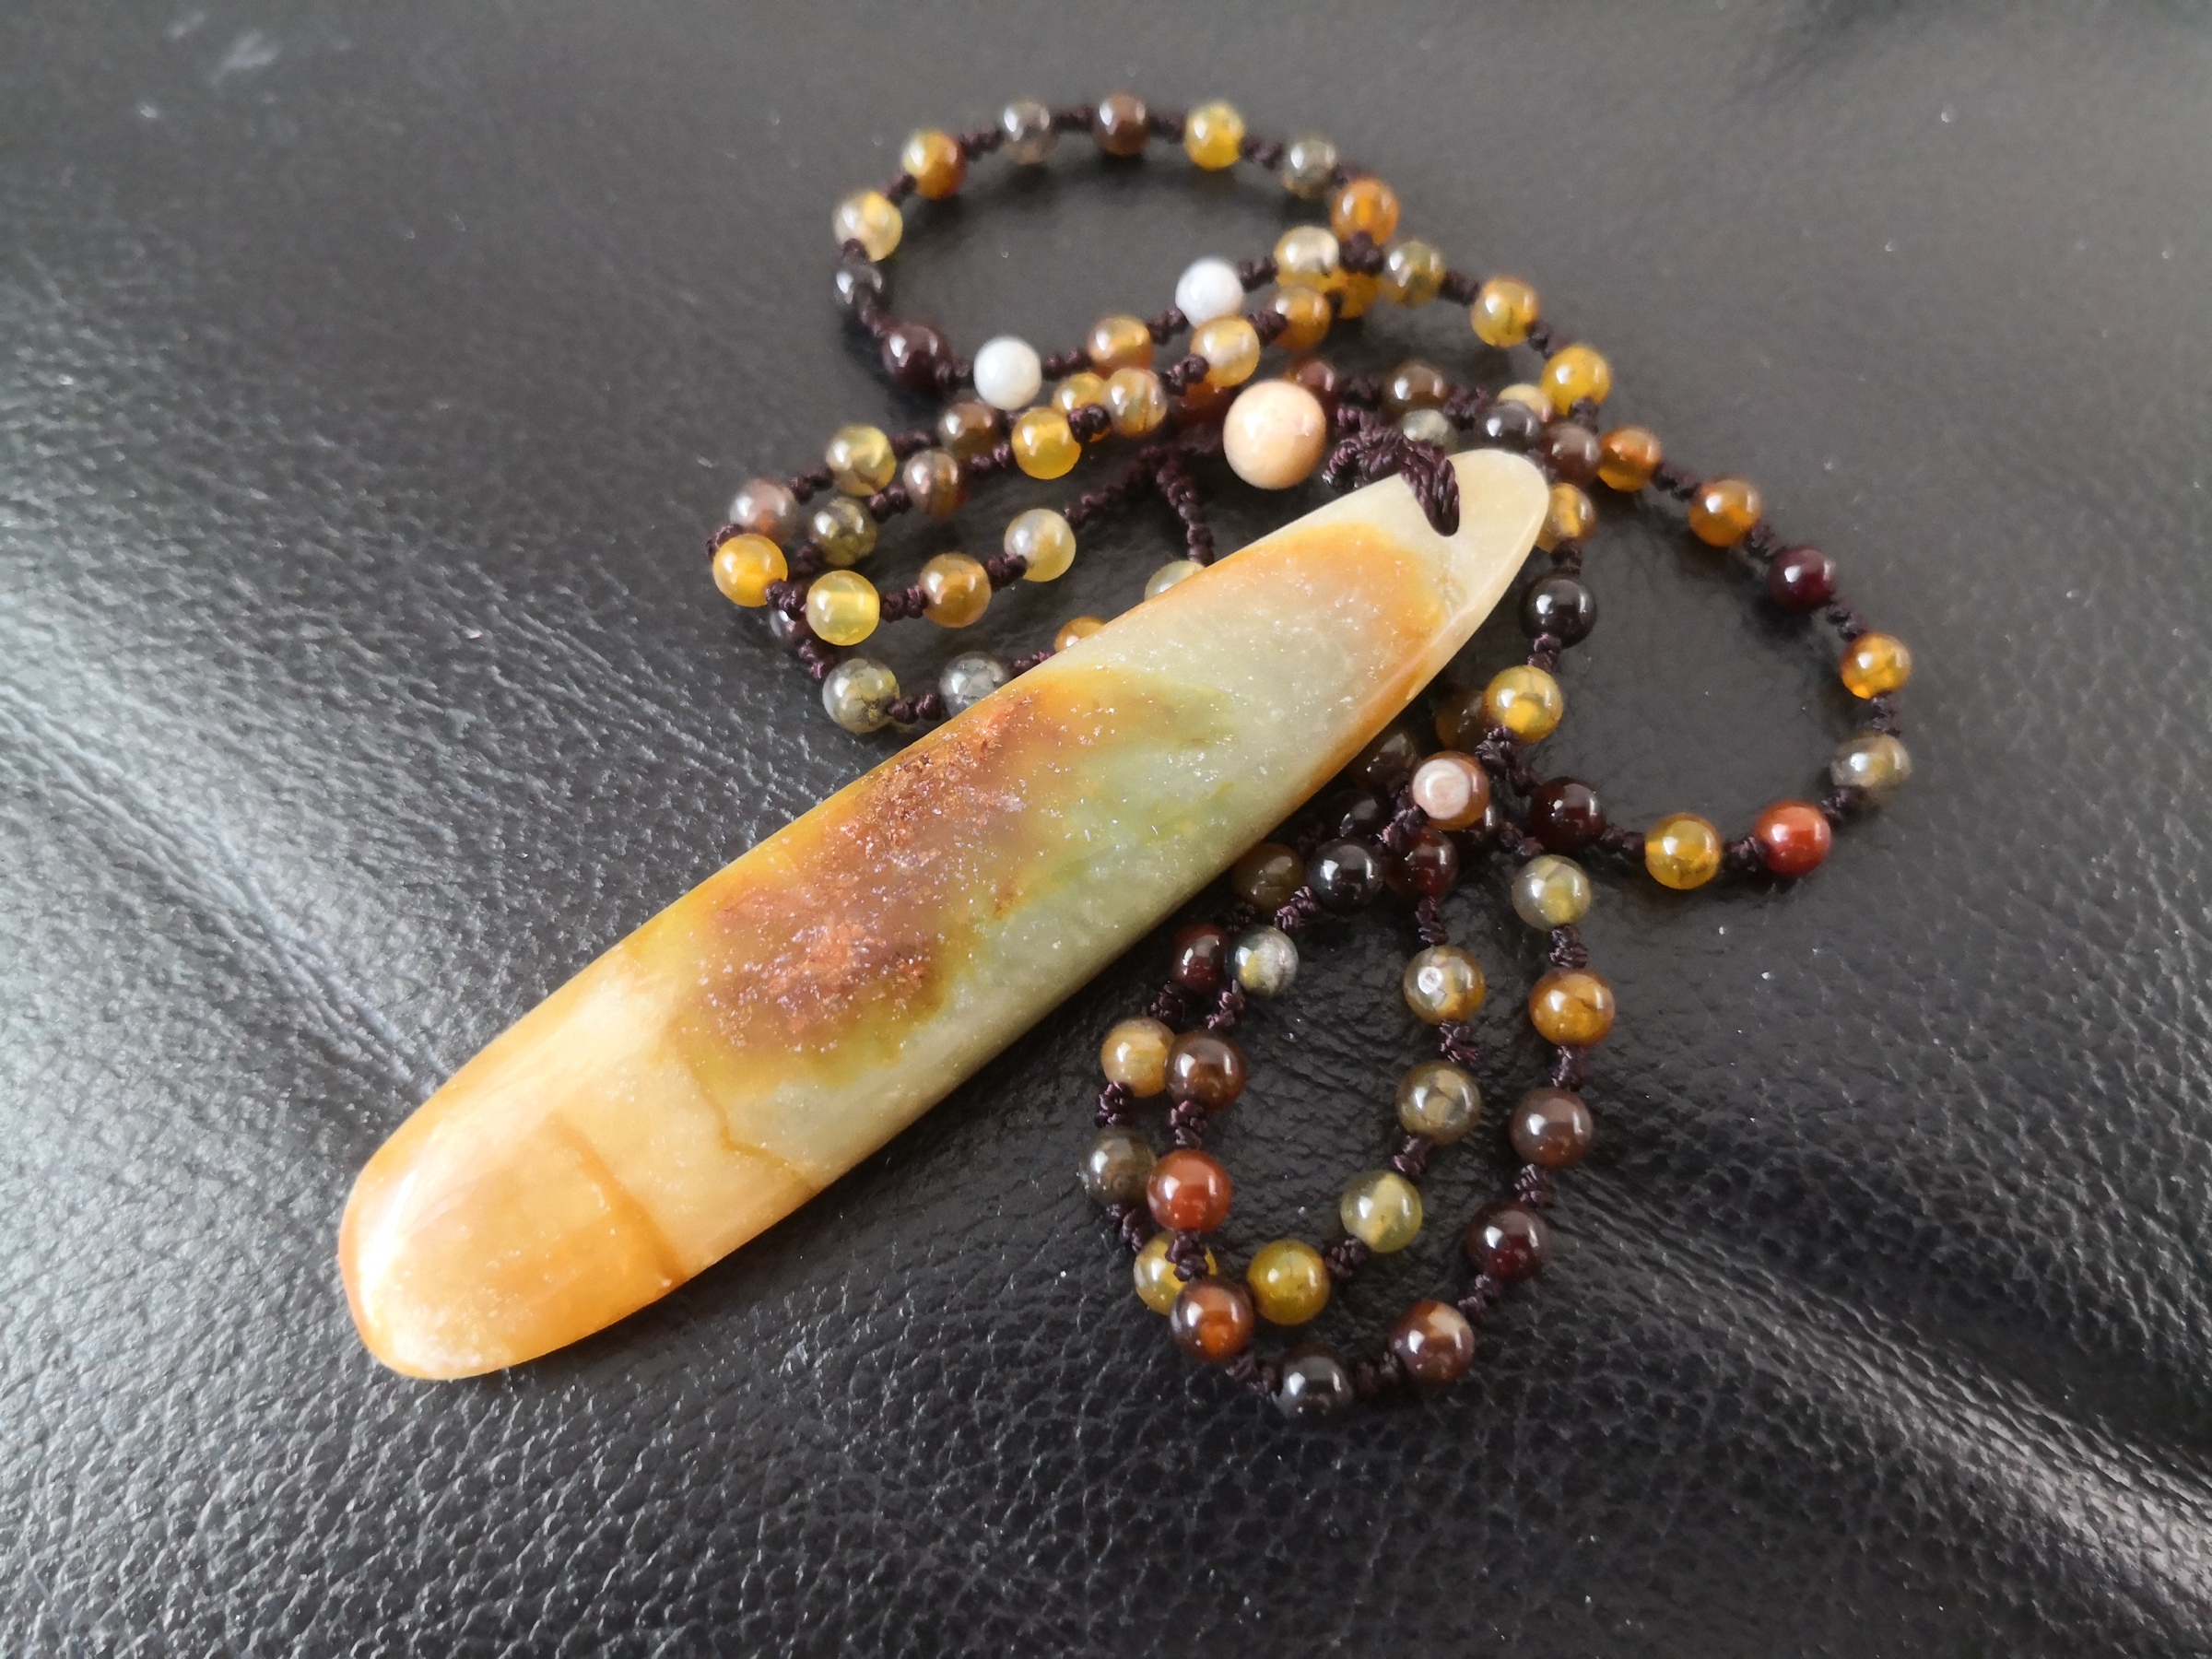 🍀 P116 - Natural Serpentine Jade Pendant With Necklace Rope 4mm beads 天然岫岩玉石王 吊坠 配项链绳4mm珠子